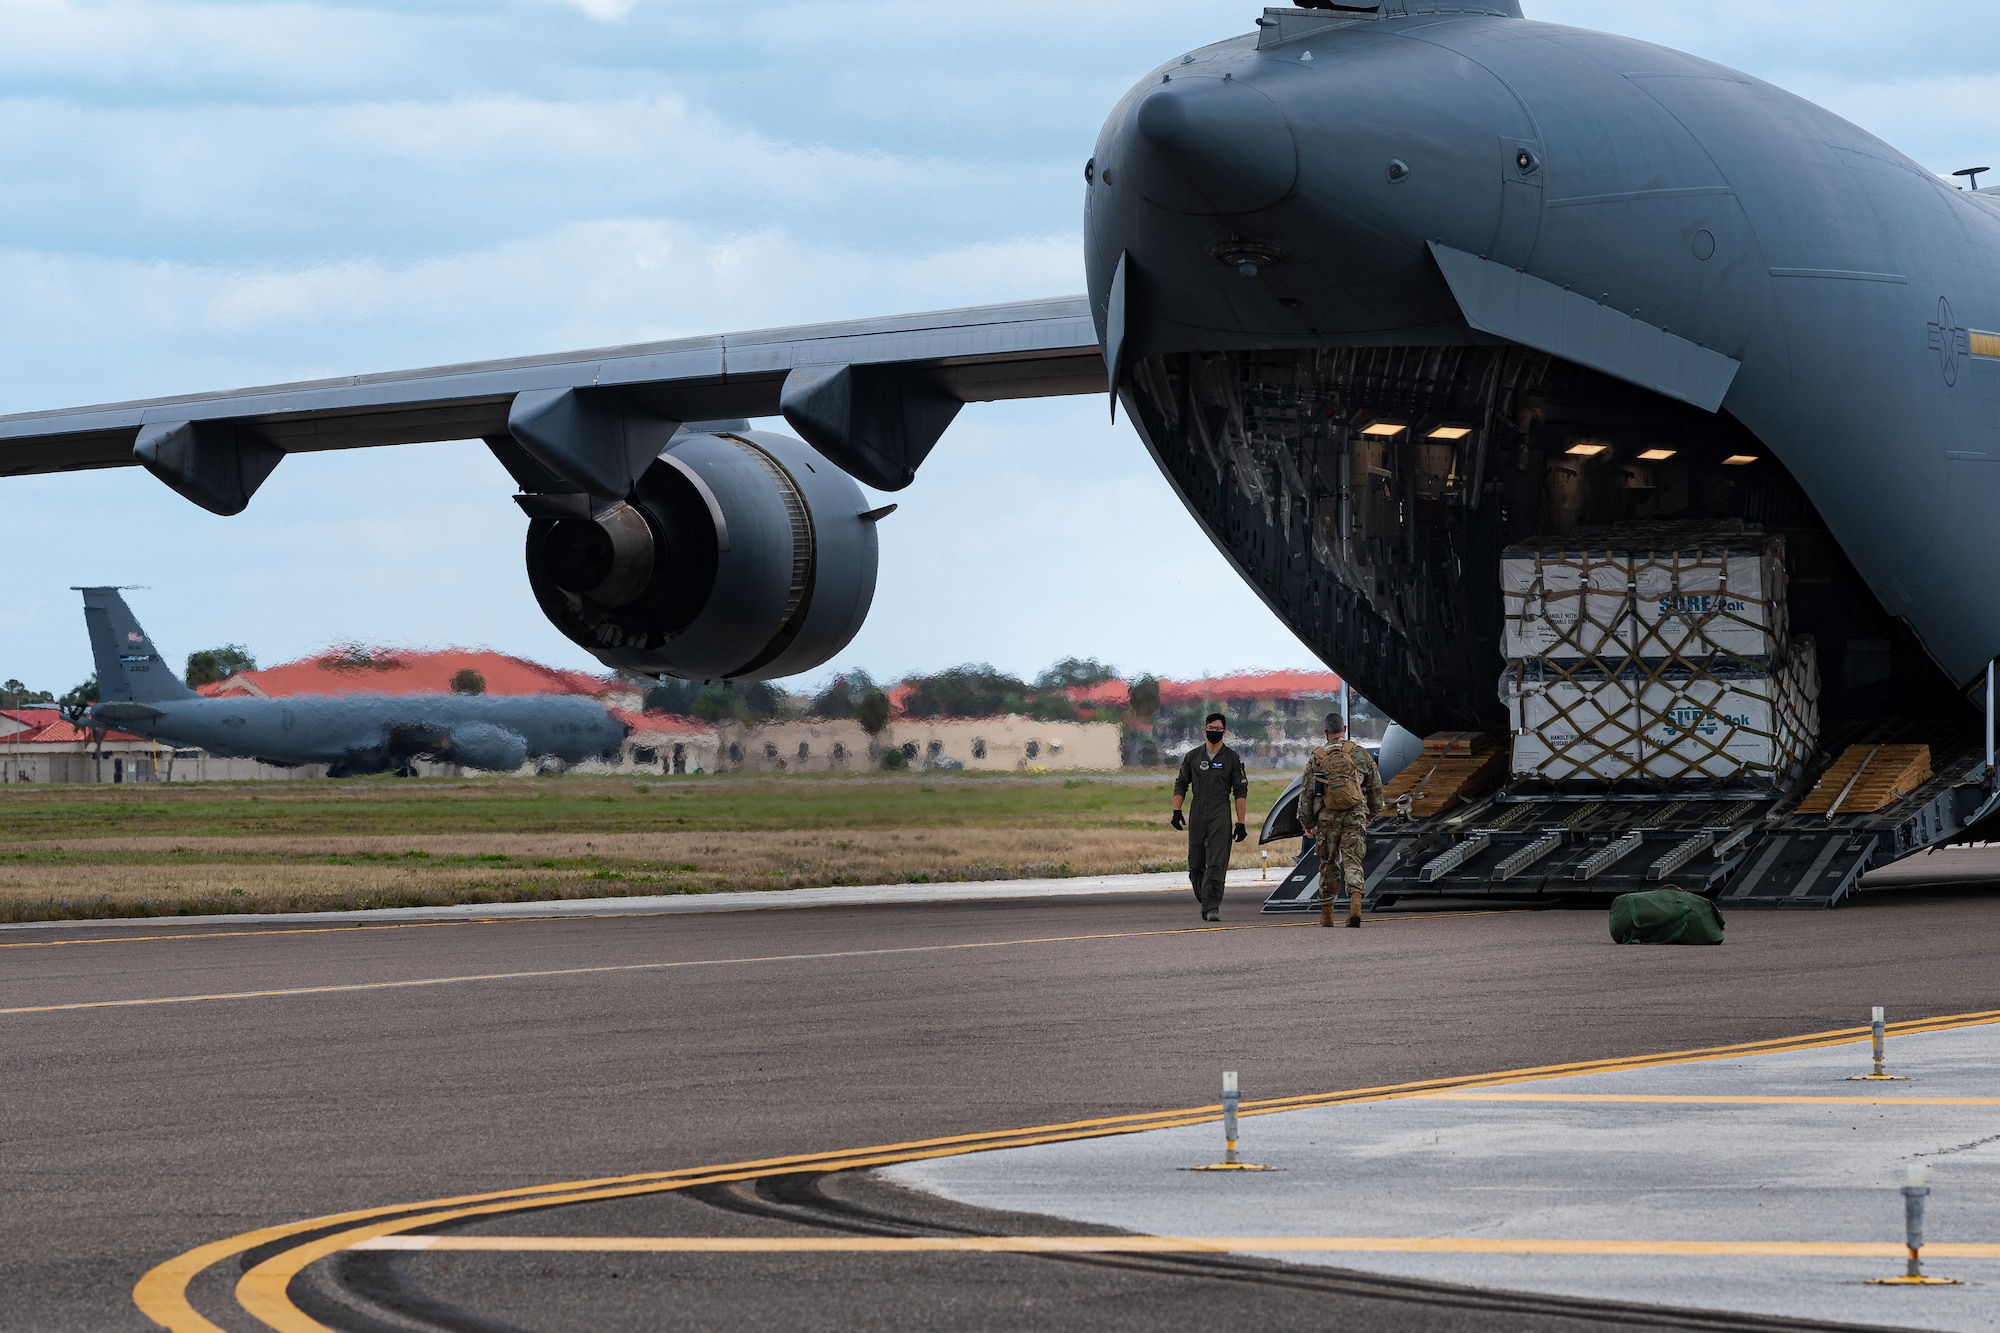 A photo of Airmen preparing to unload an aircraft